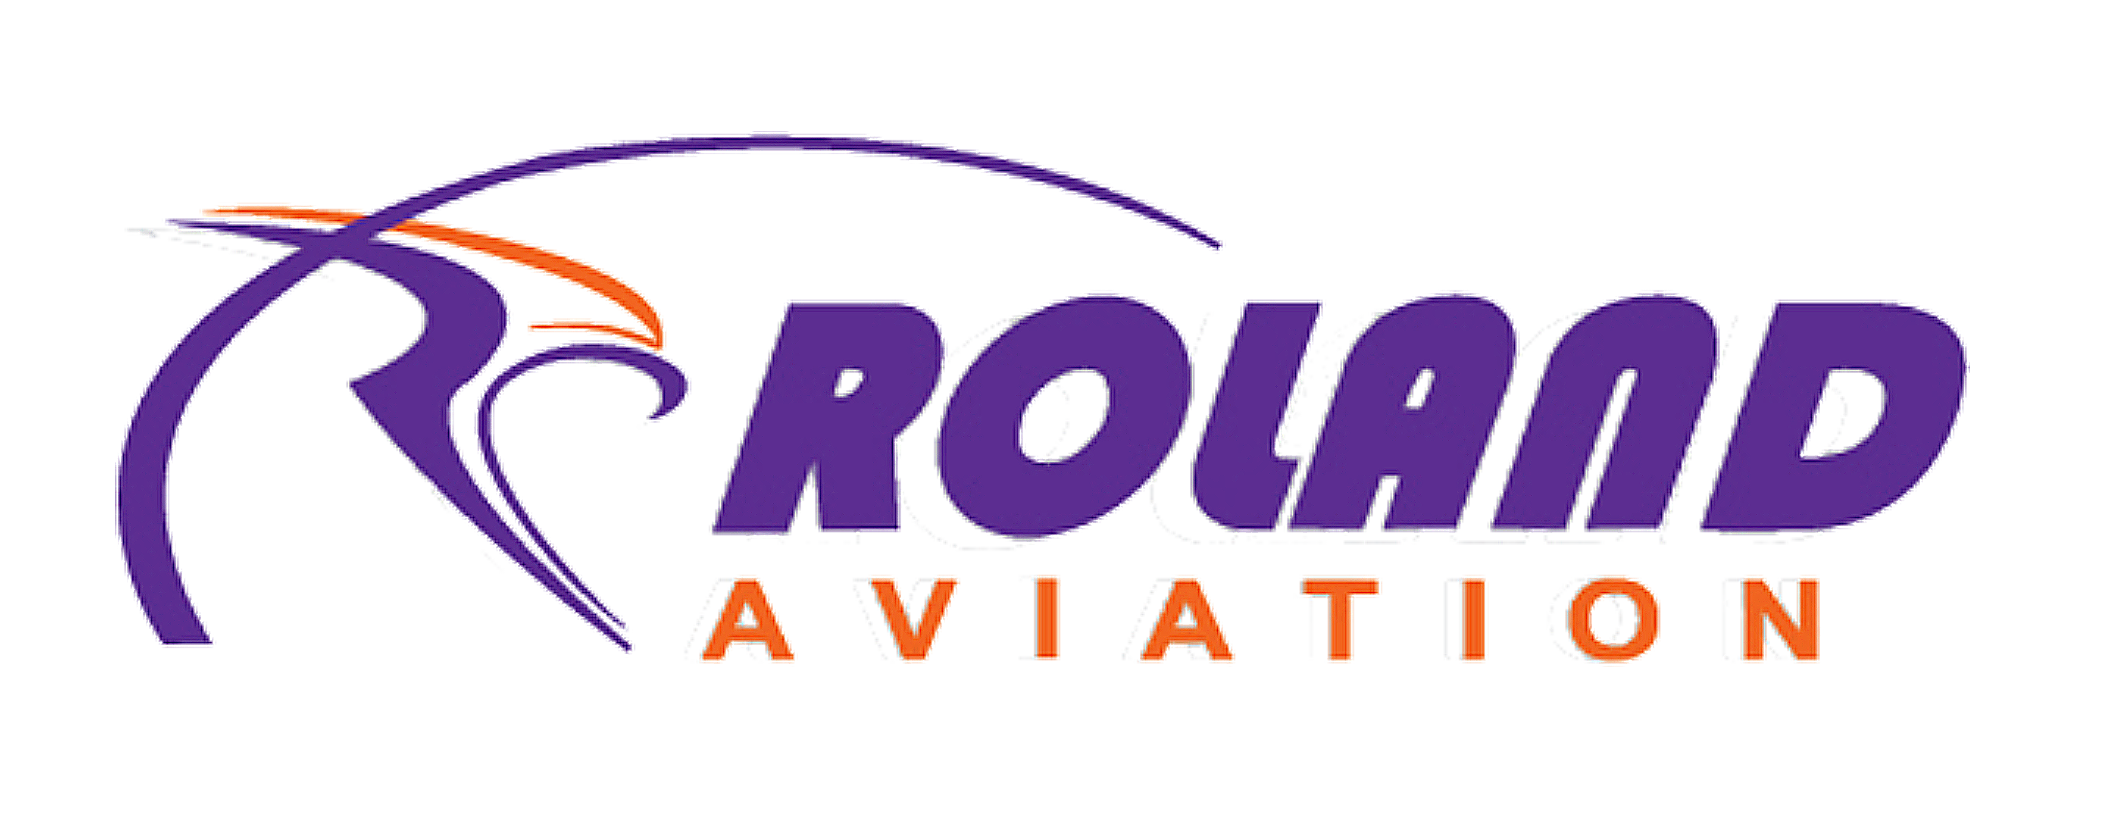 Roland Aviation Services